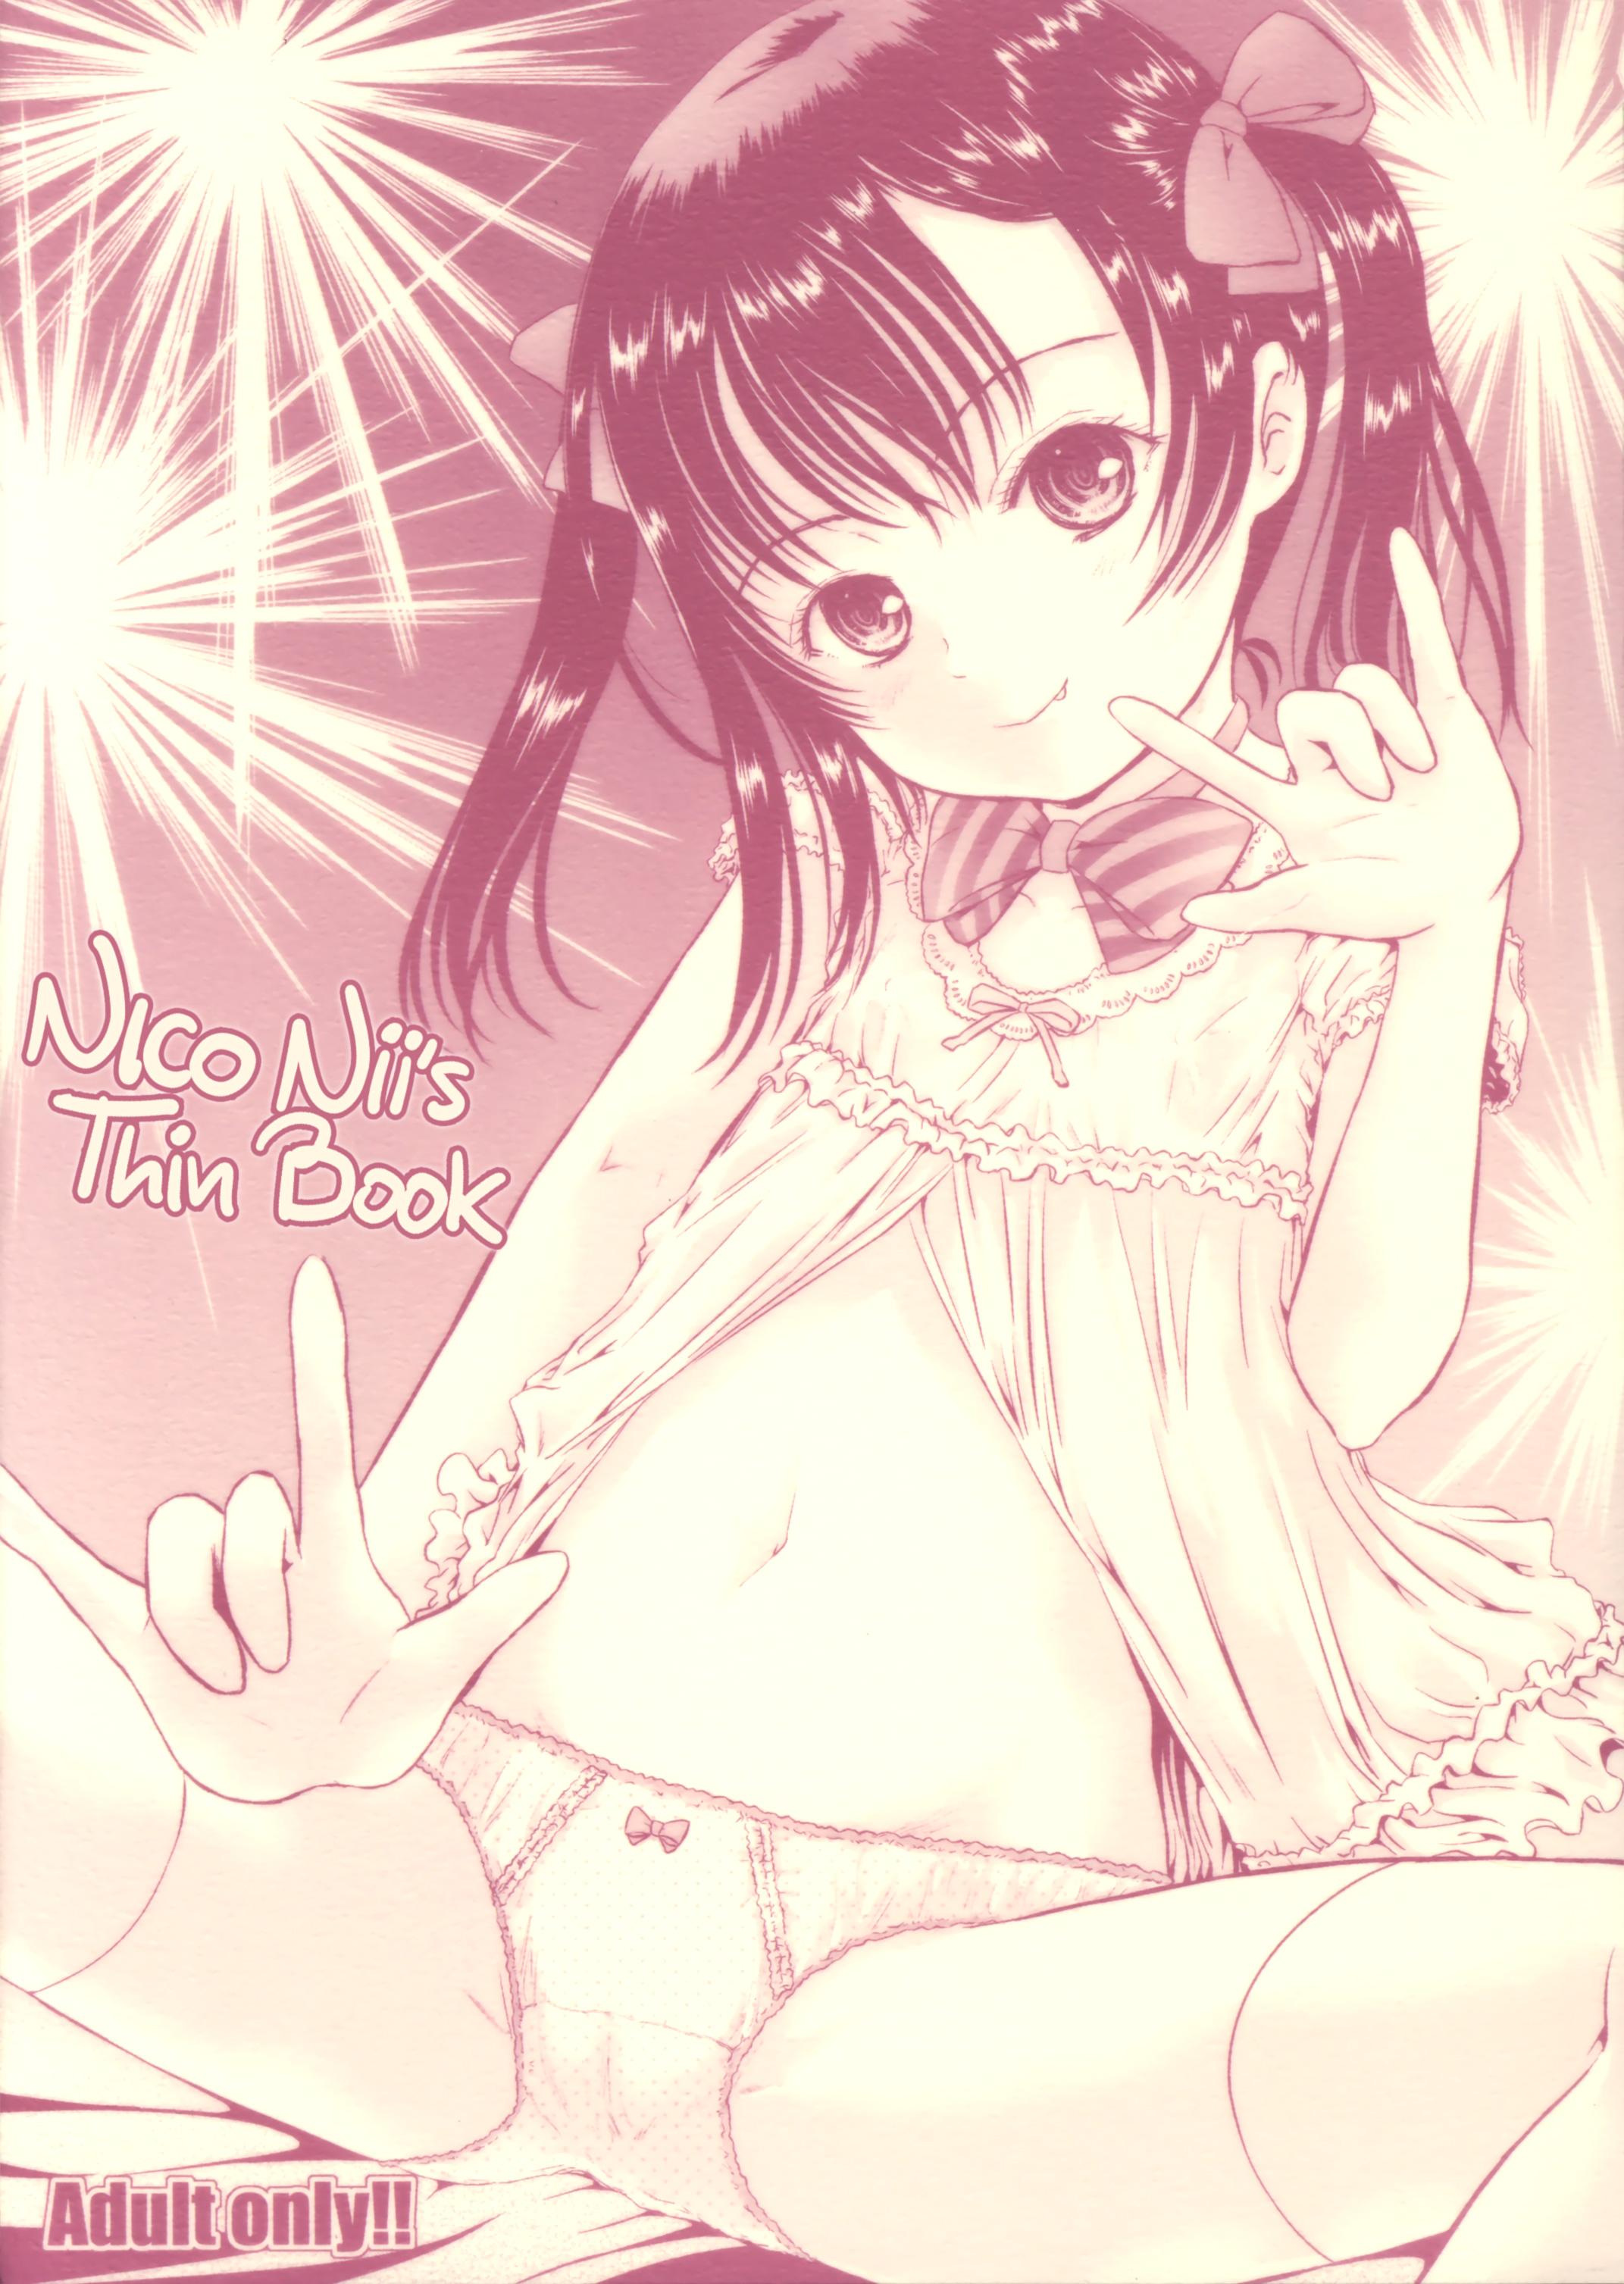 Nico-nii no Usui Hon!! | NicoNii's Thin Book 0